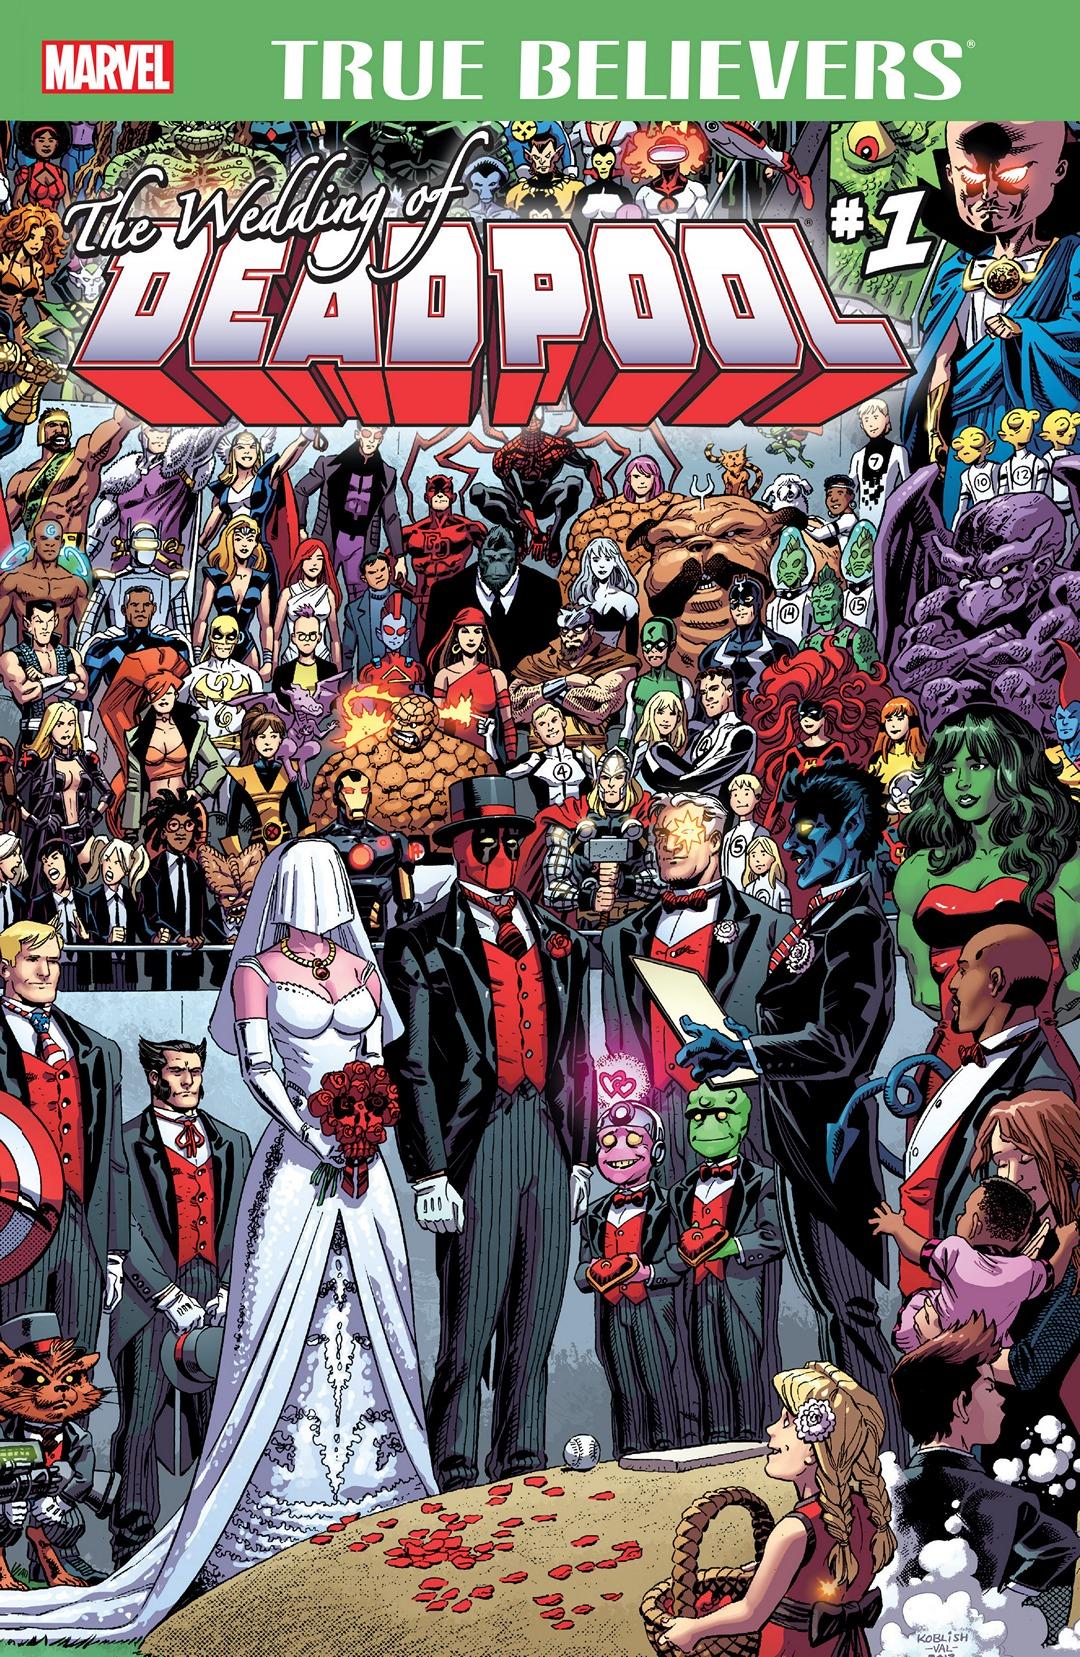 True Believers: The Wedding of Deadpool Vol. 1 #1